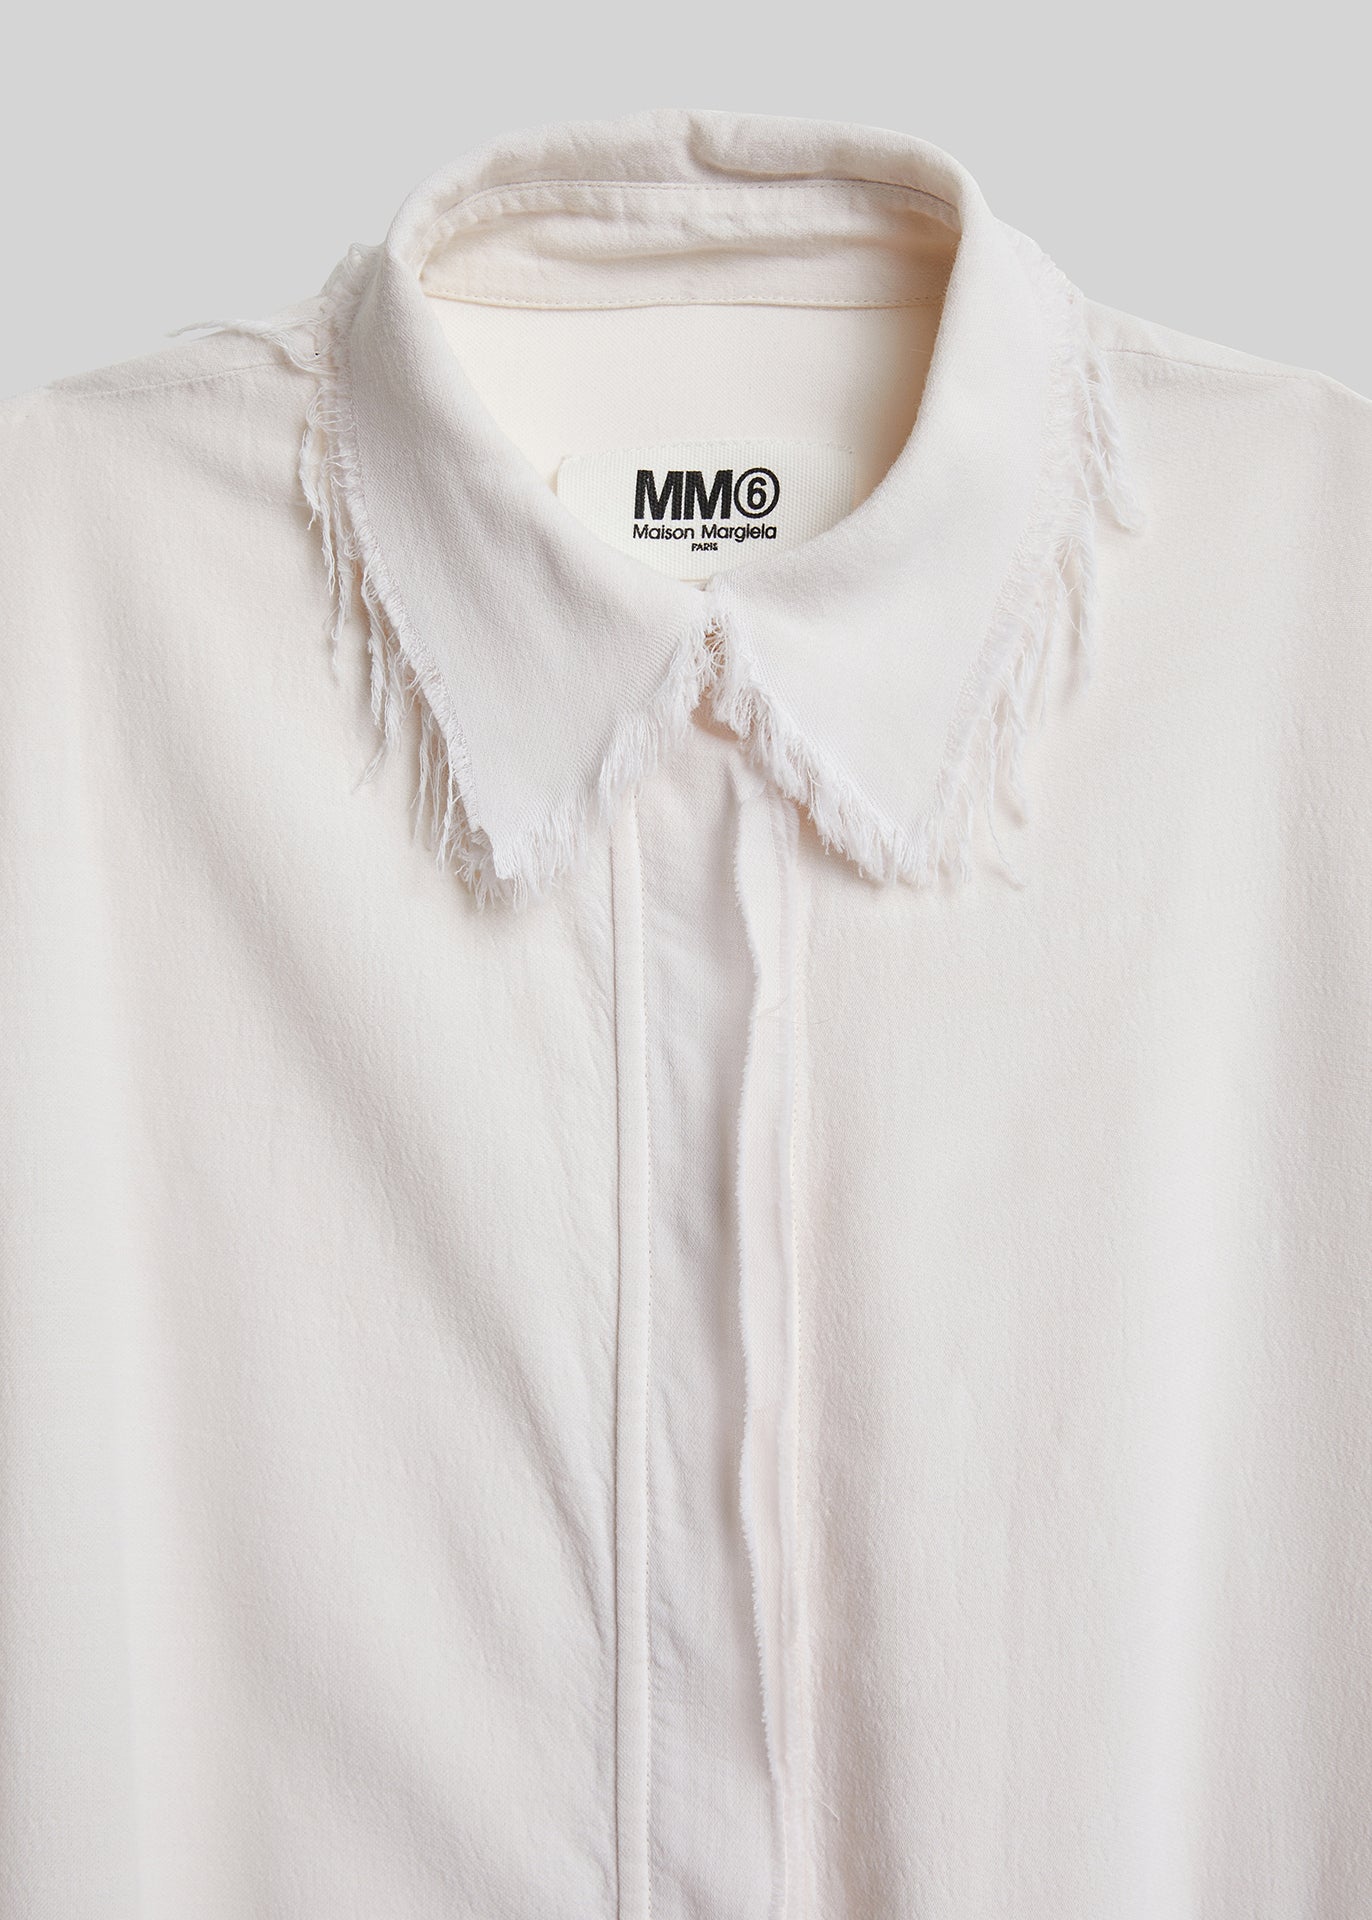 MM6 Maison Margiela shirt - S